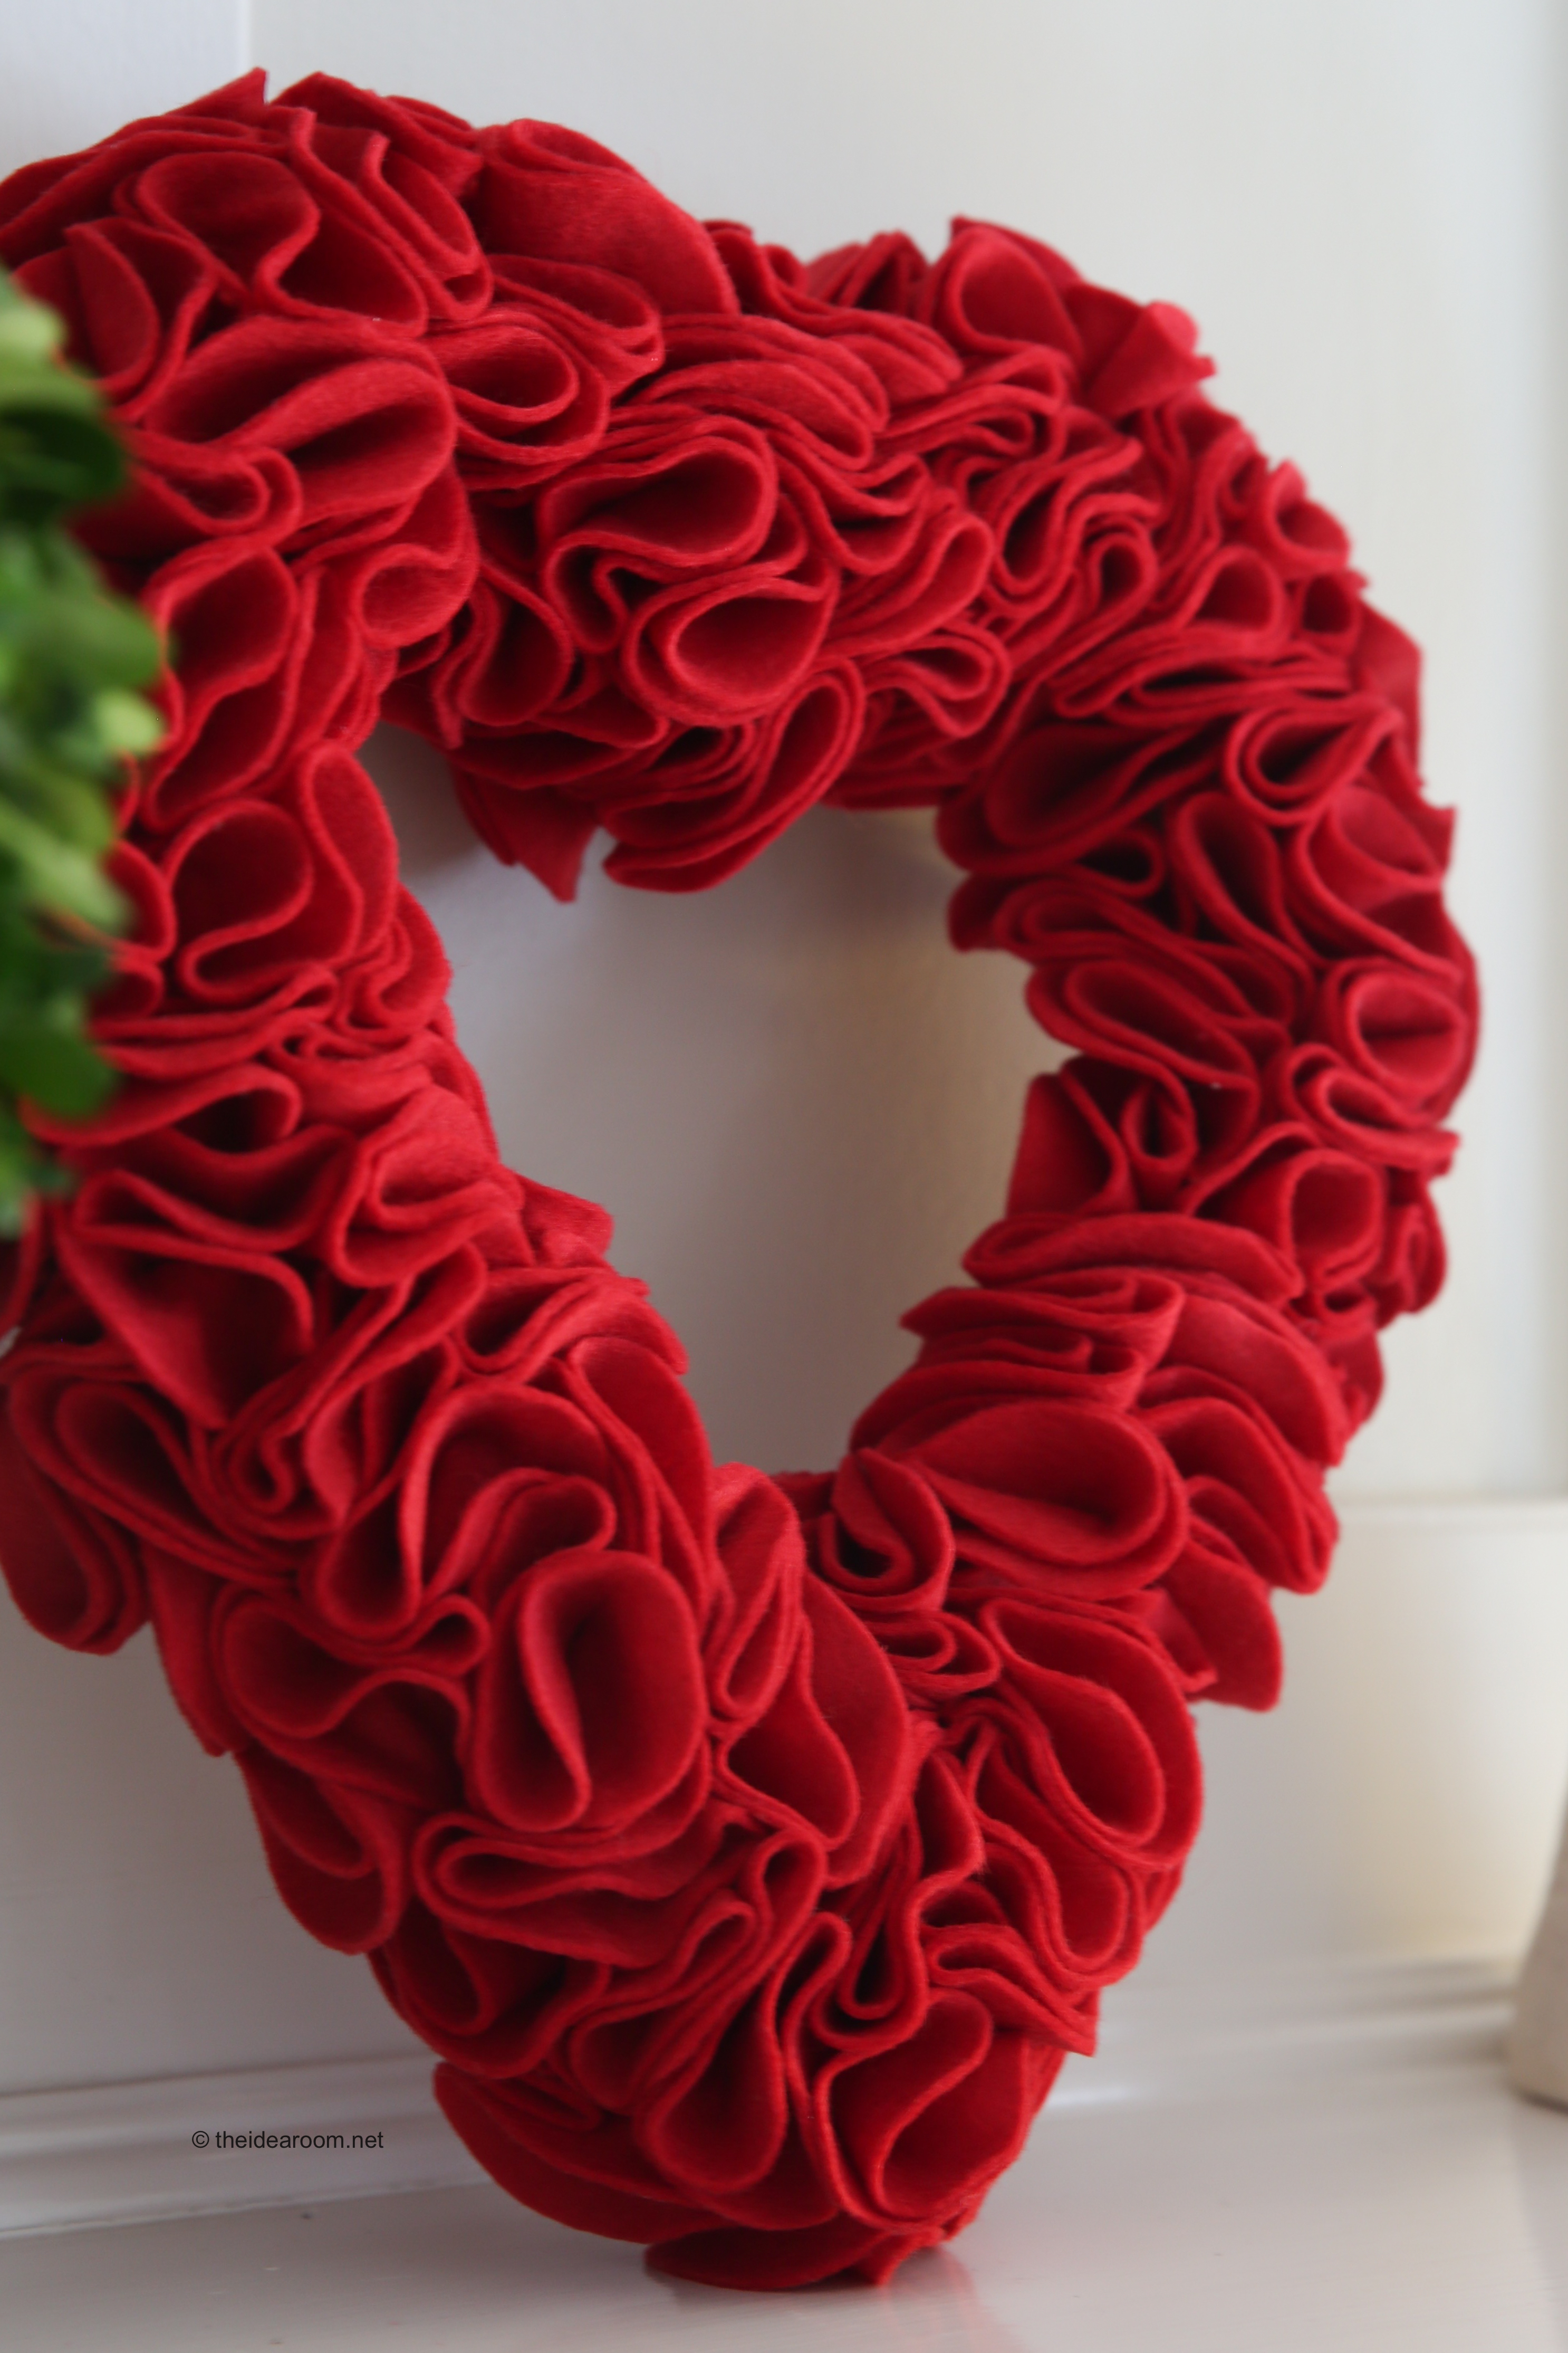 How To Make DIY Heart Wreath Ideas: Step By Step - The Idea Room